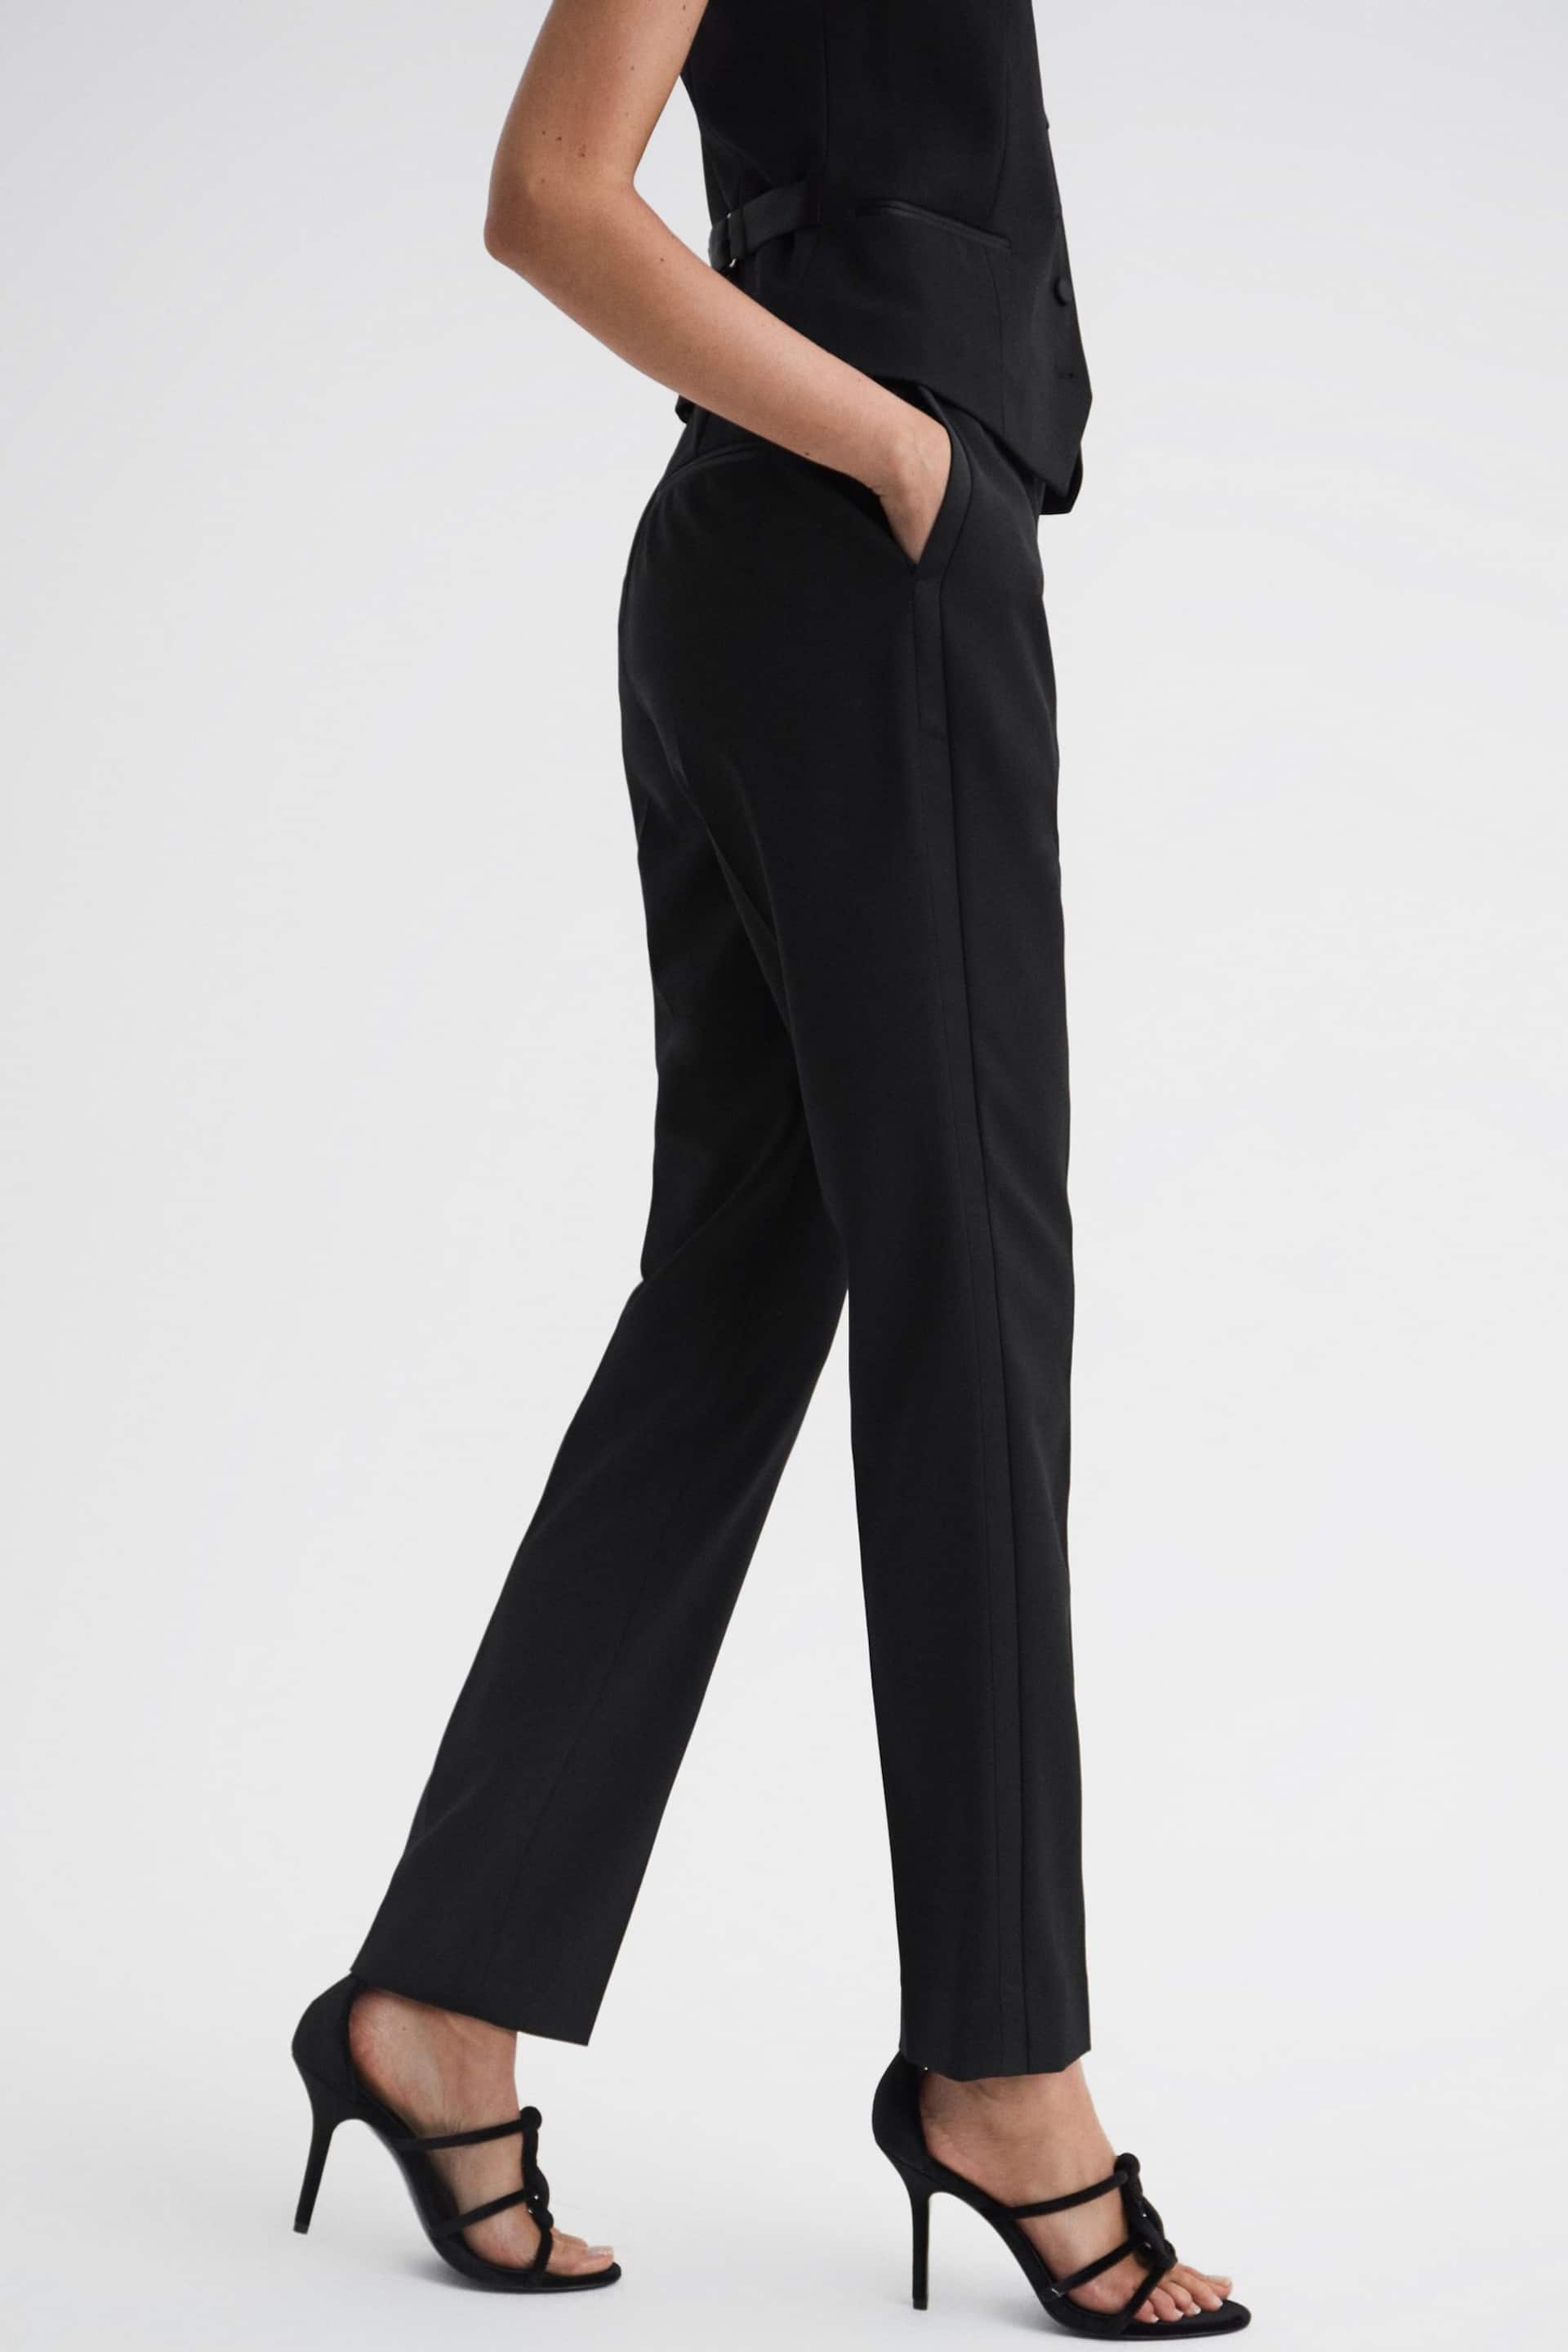 Reiss Black Alia Slim Fit Satin Stripe Suit Trousers - Image 1 of 5